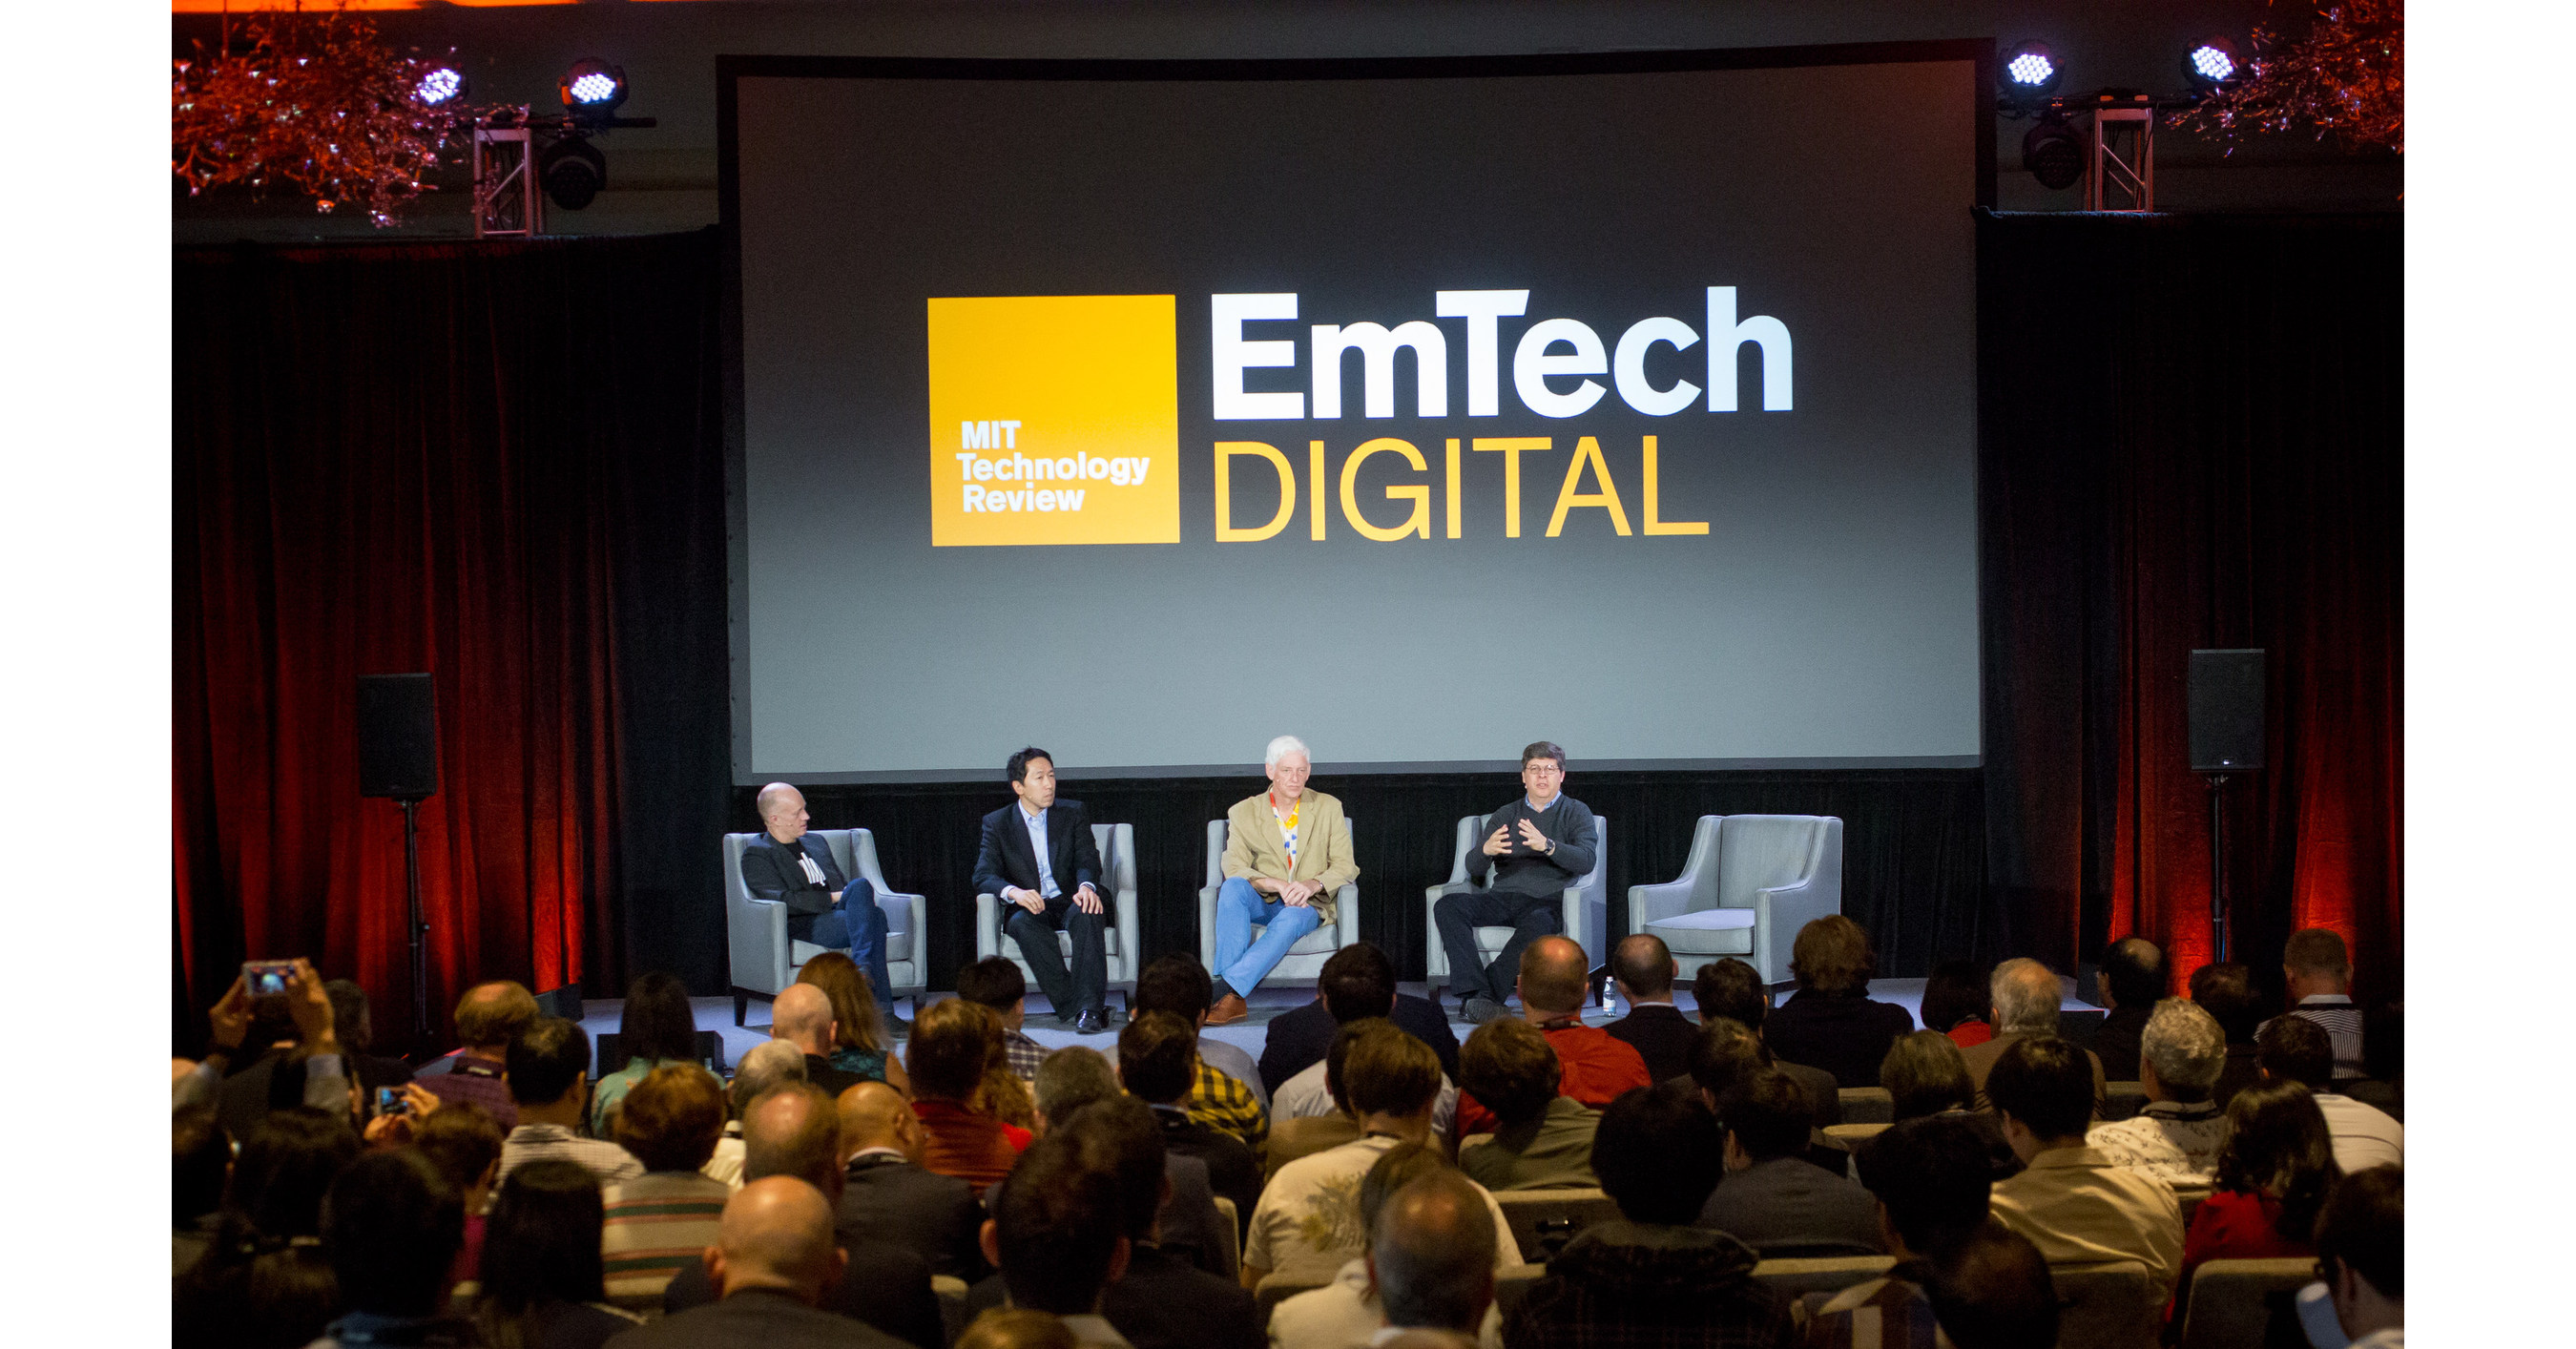 MIT Technology Review Announces 2018 EmTech Digital Conference March 2627